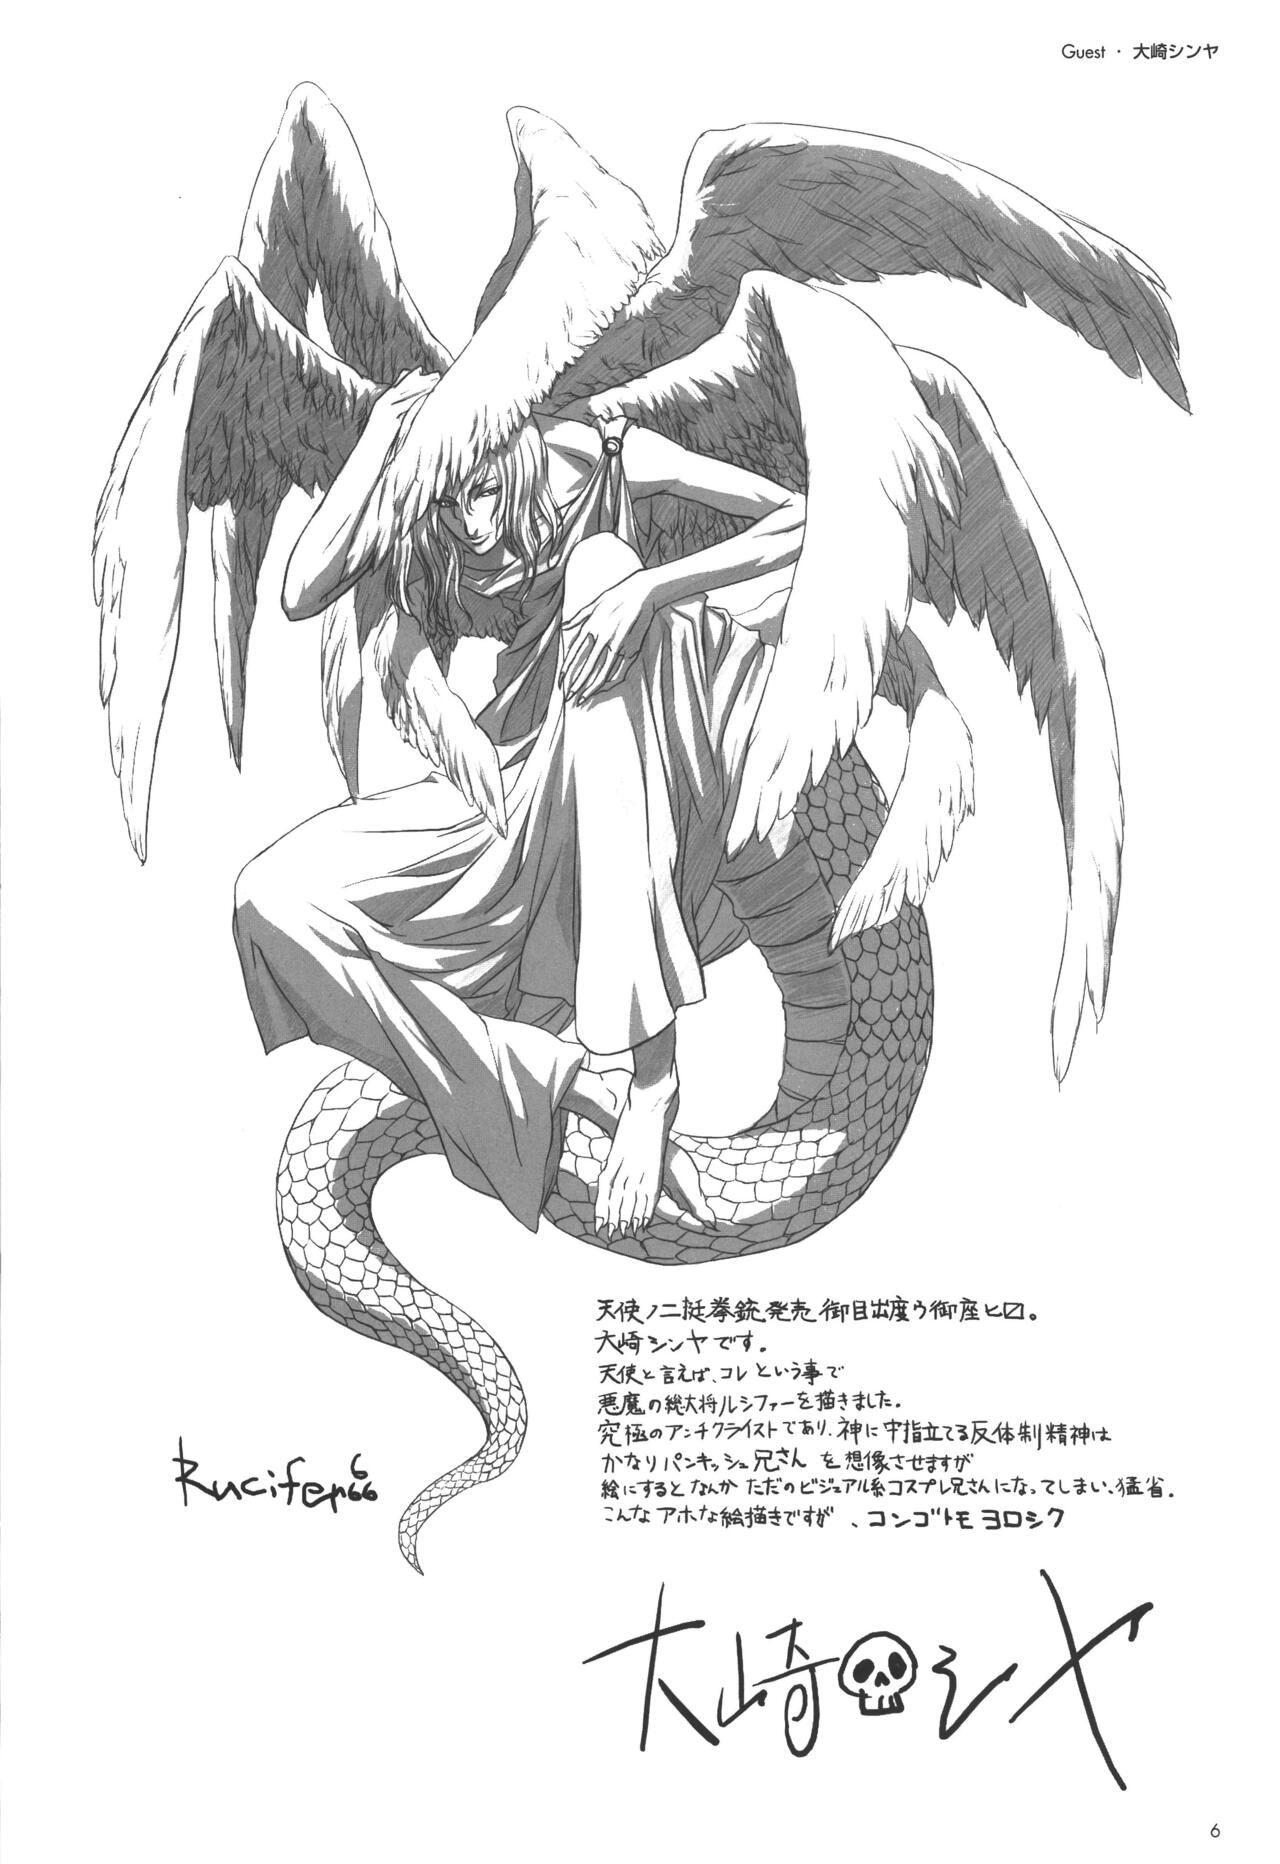 Gathering of Angels : Tenshi no Nichou Kenjuu -Angelos Armas- 6